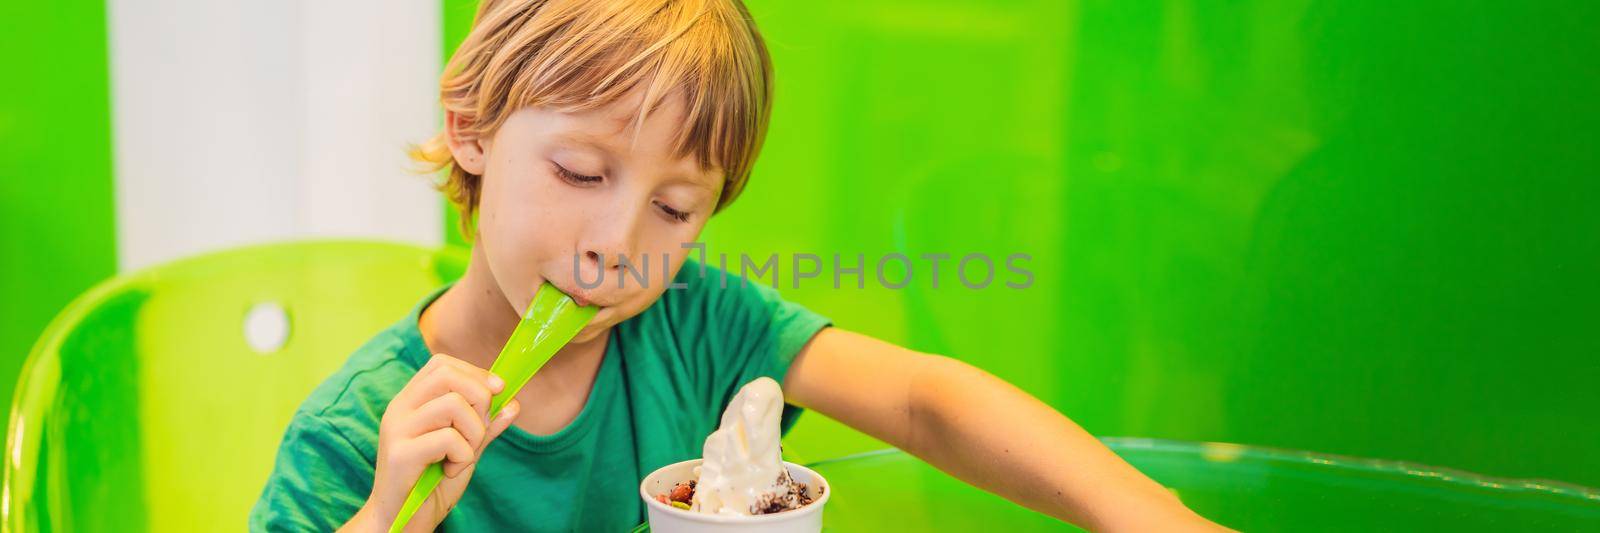 Happy young boy eating a tasty ice cream or frozen yogurt BANNER, LONG FORMAT by galitskaya